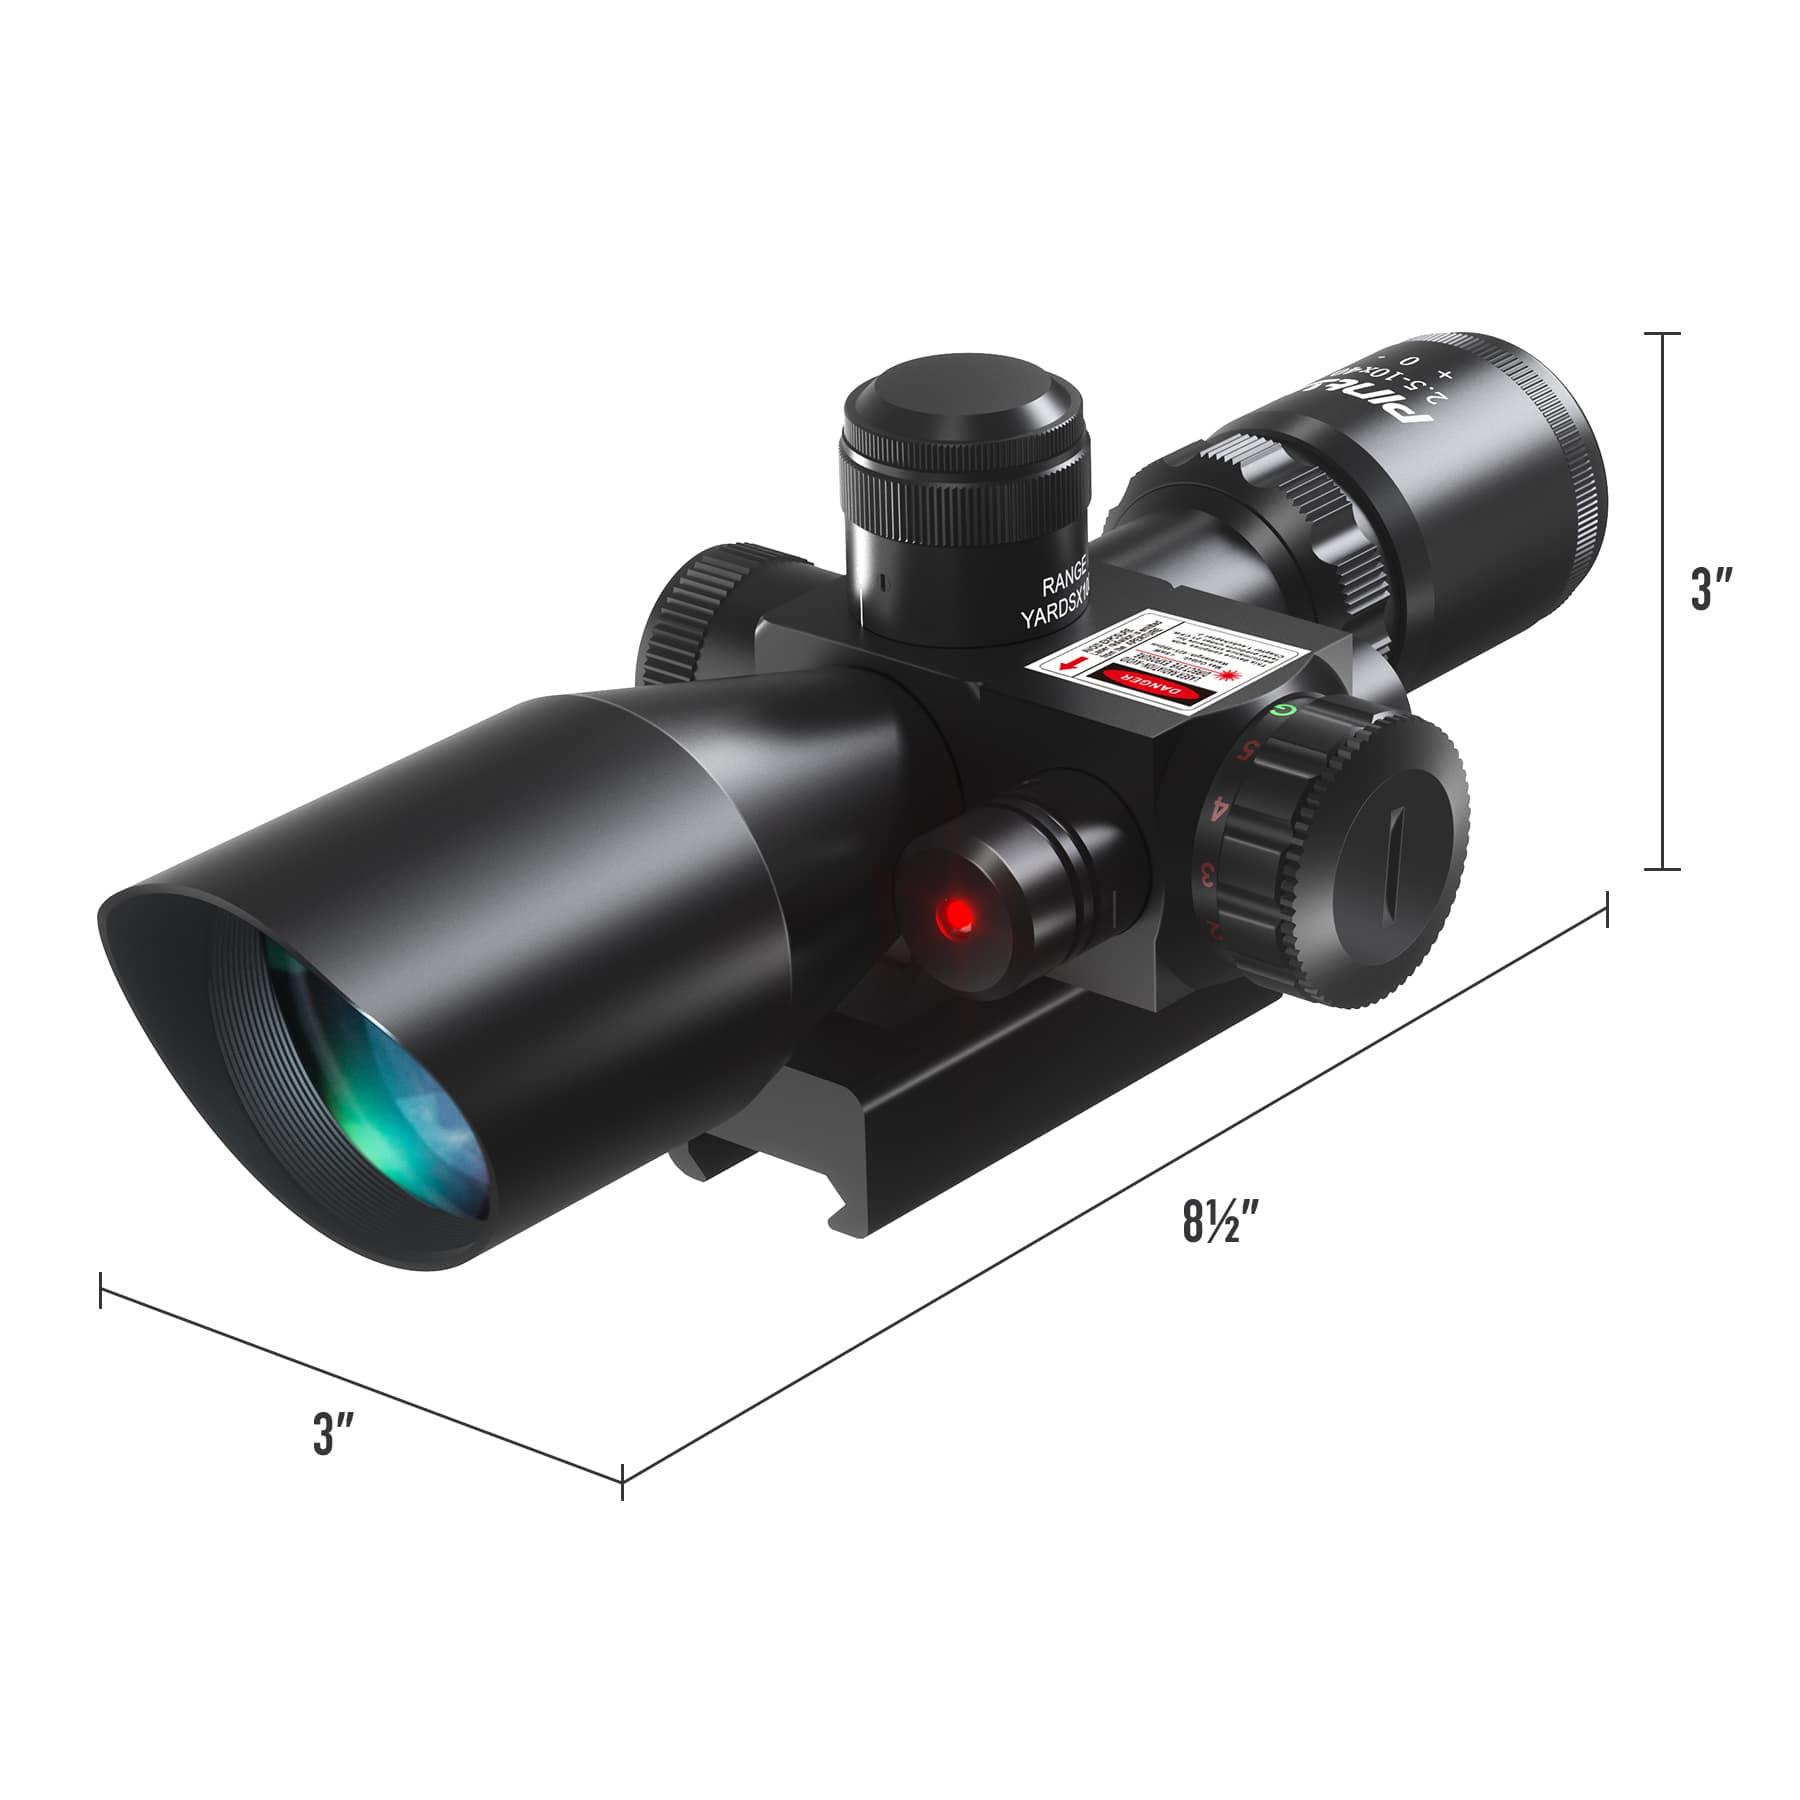    Mil-dot-Dual-illuminated-2.5-10x40EG-Tactical-Rifle-Scope-w-Red-Laser-Mount-